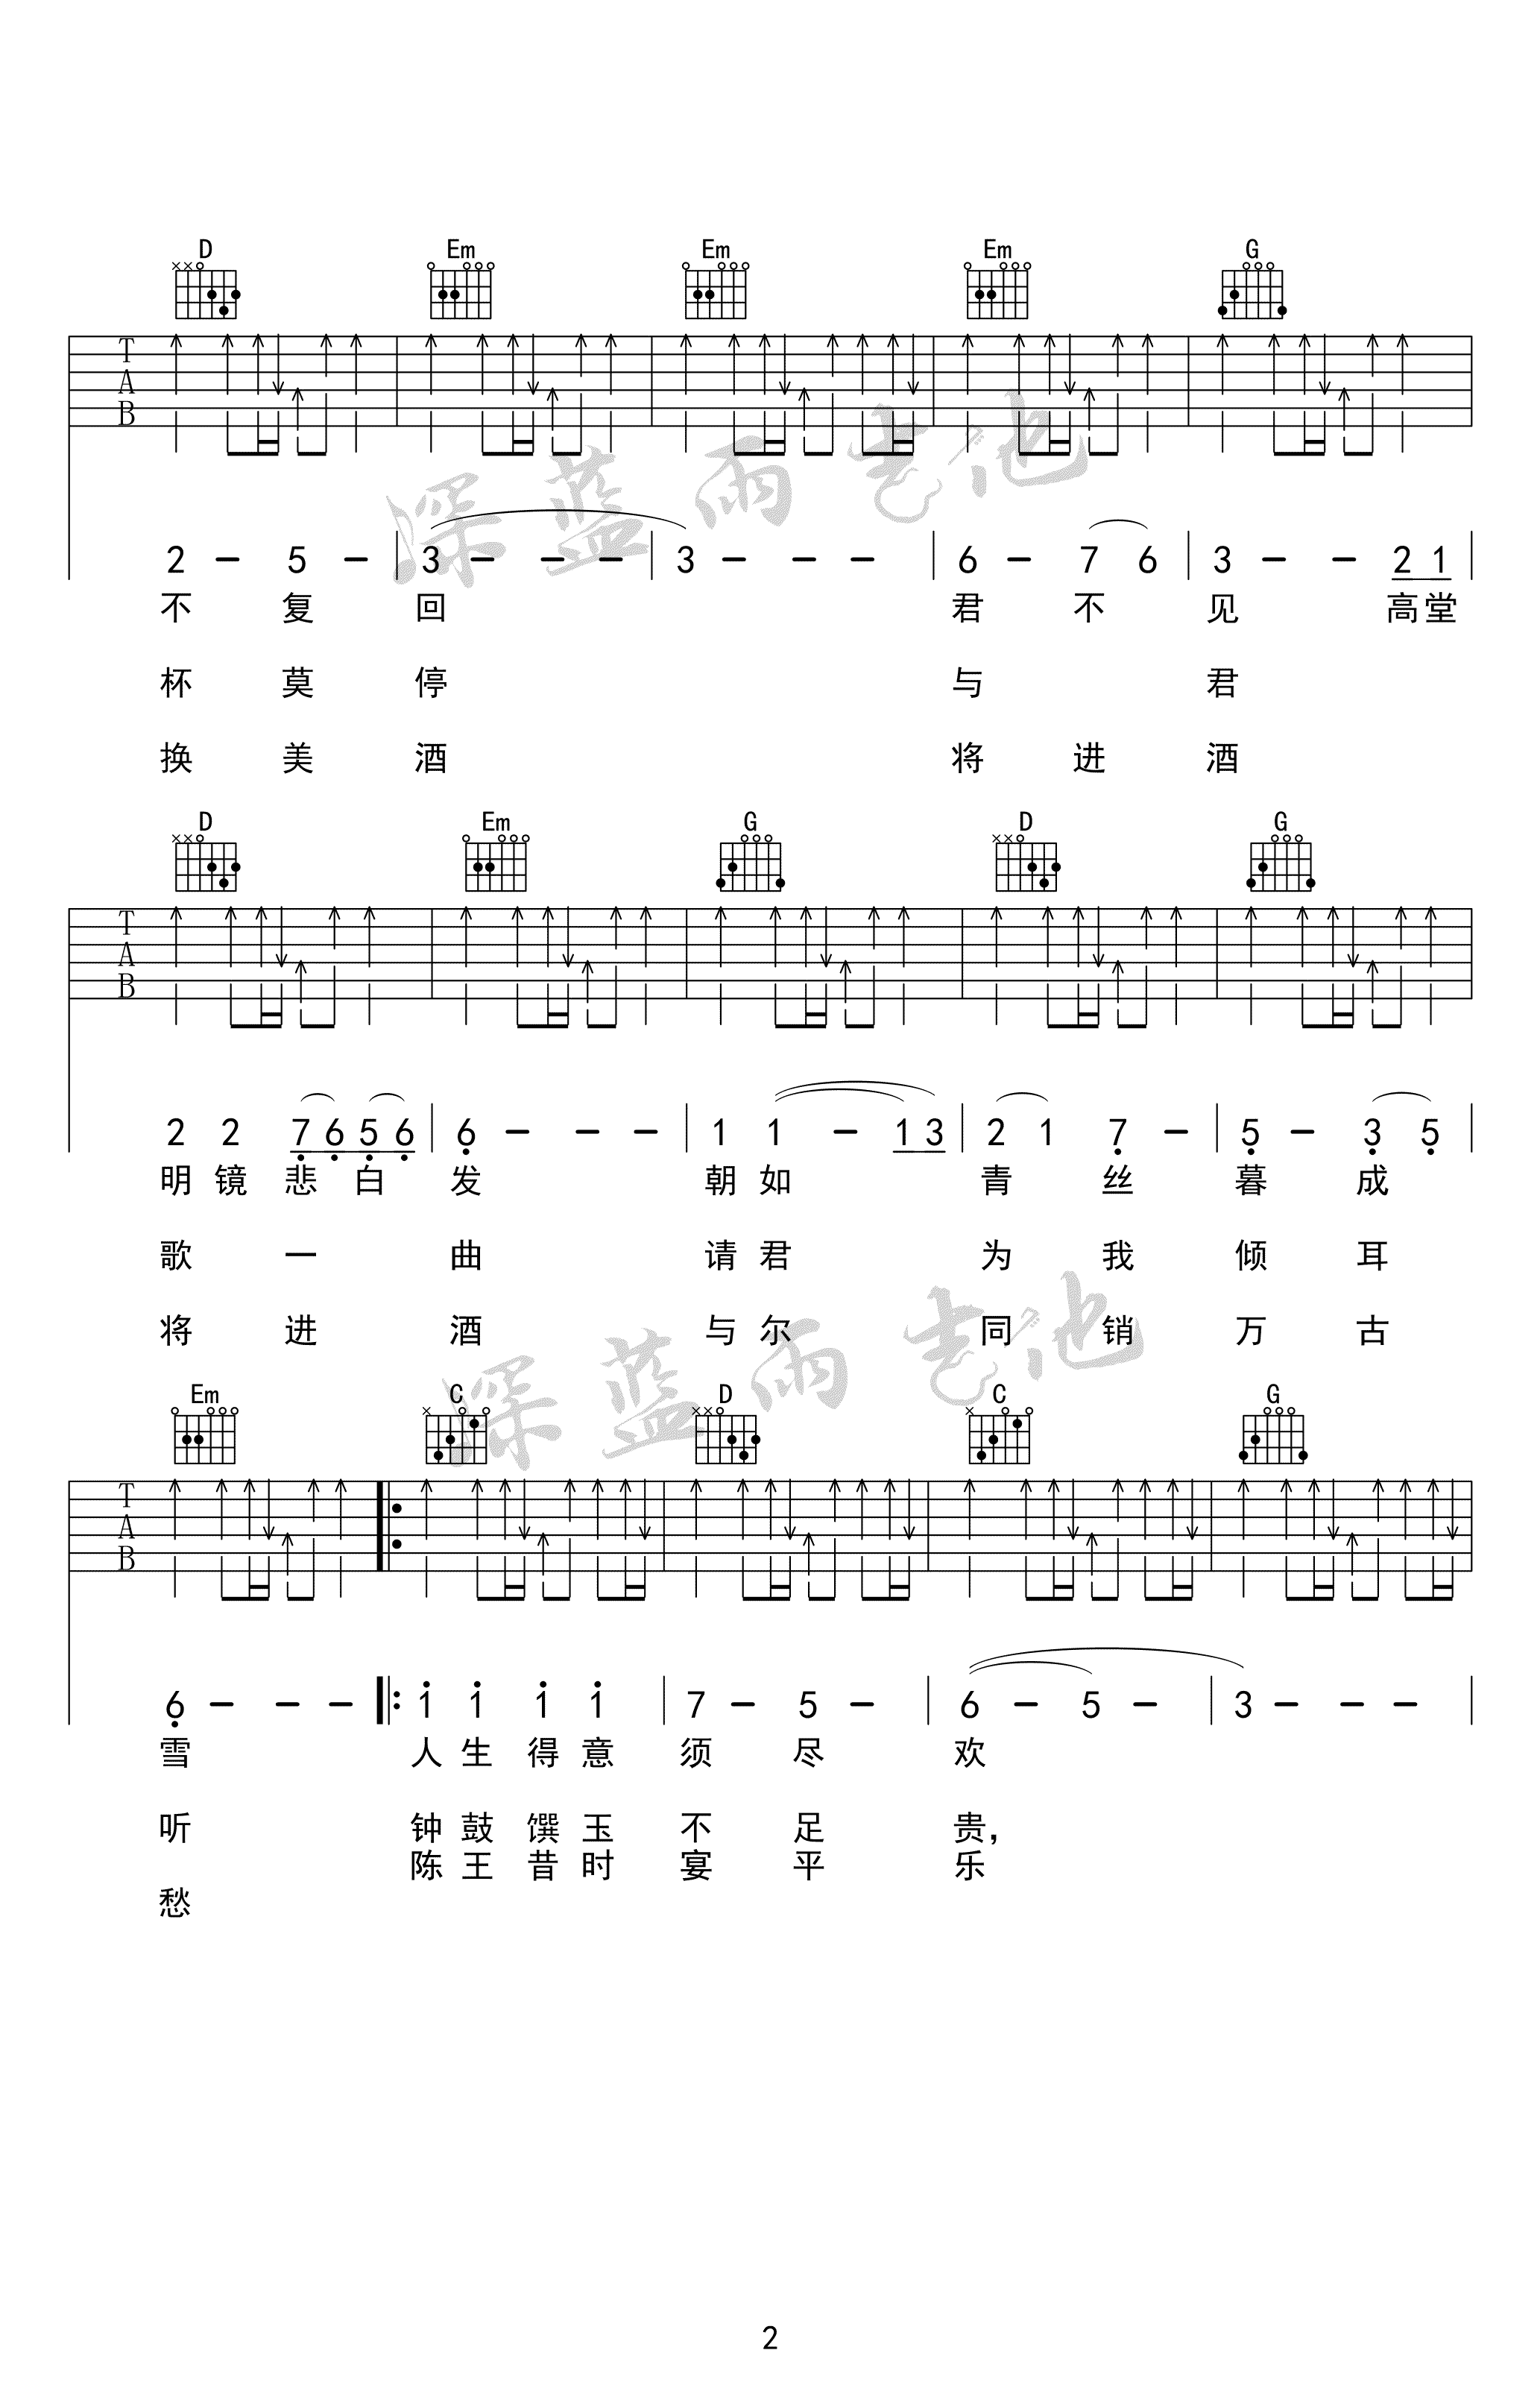 陈涌海《将进酒》吉他谱(G调)-Guitar Music Score